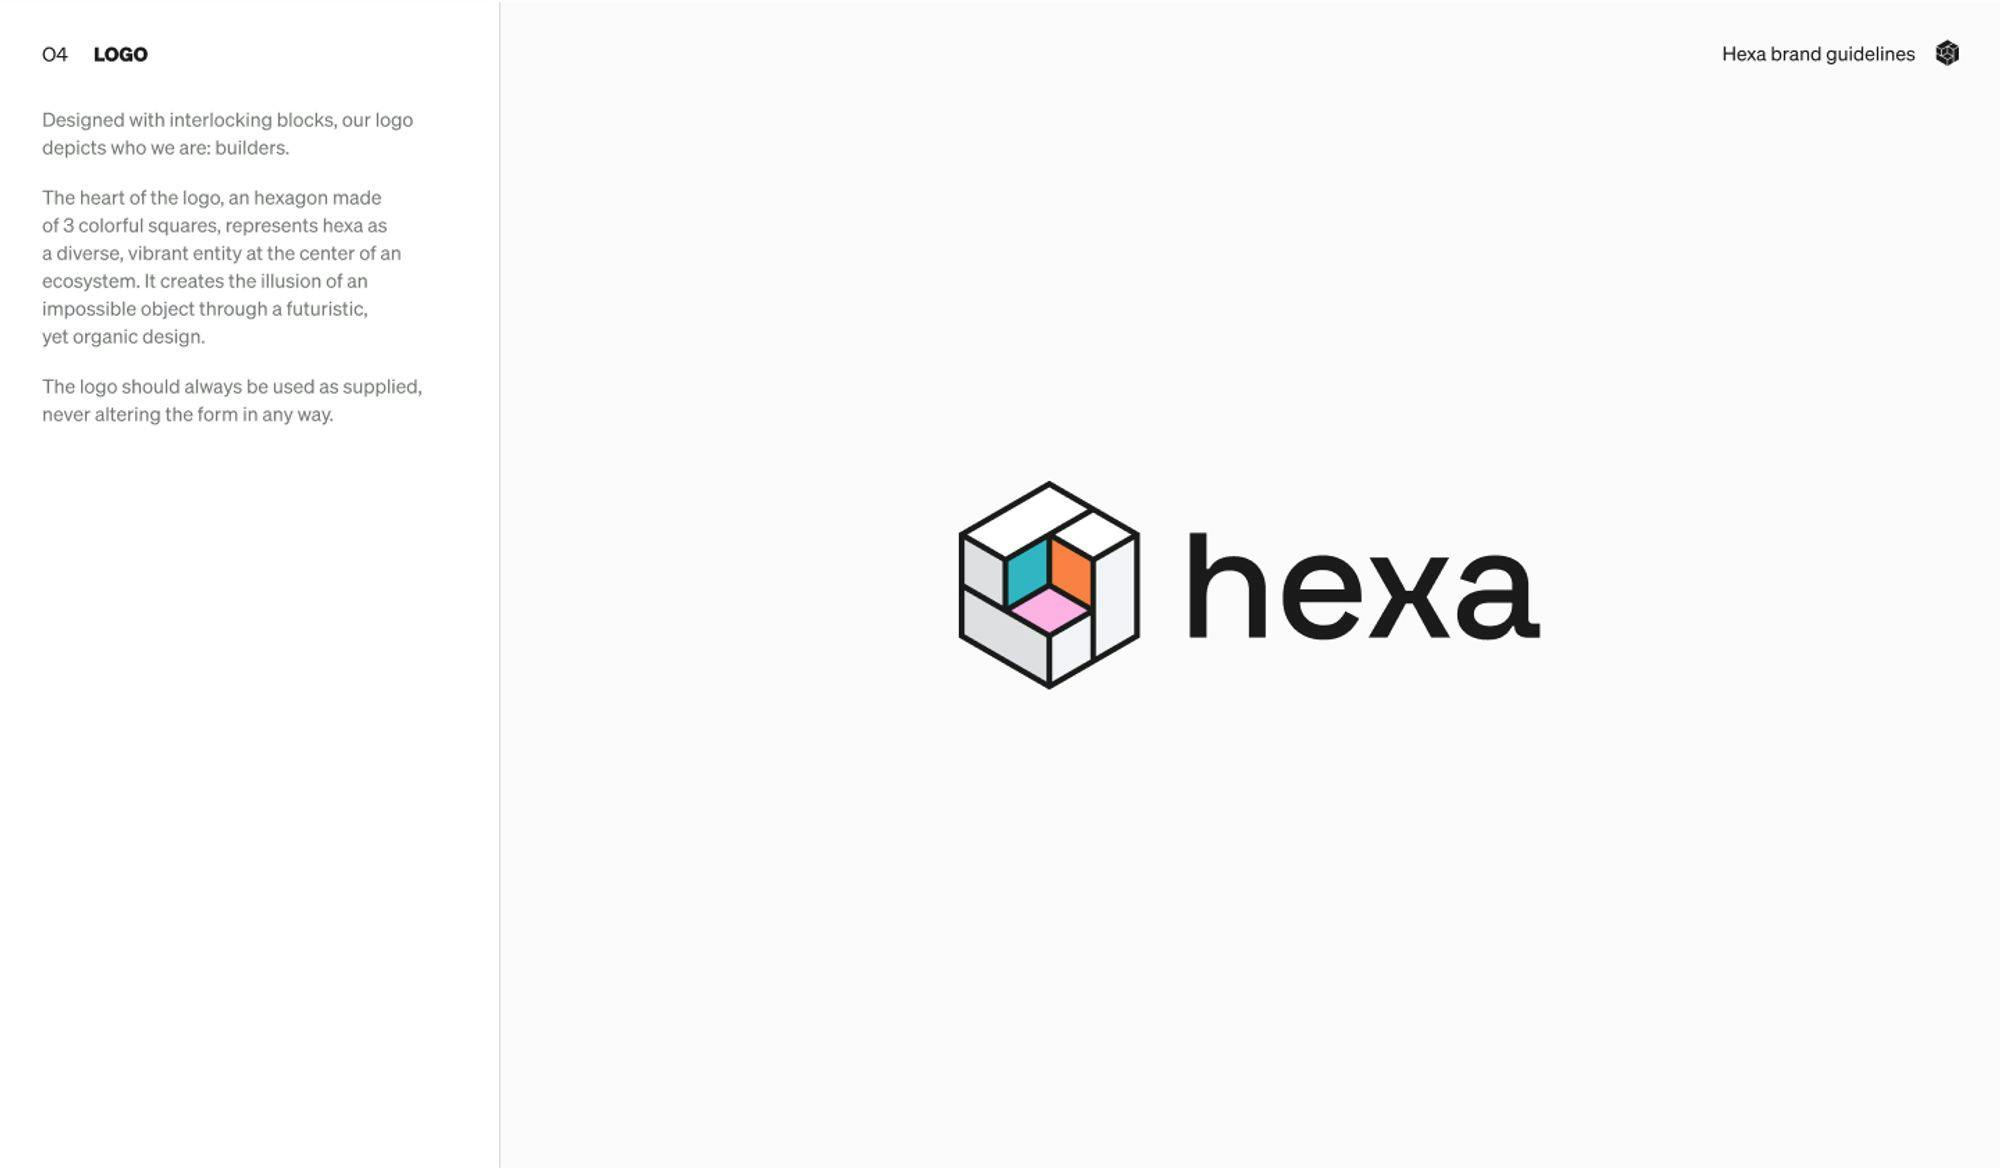 Behind the Hexa logo